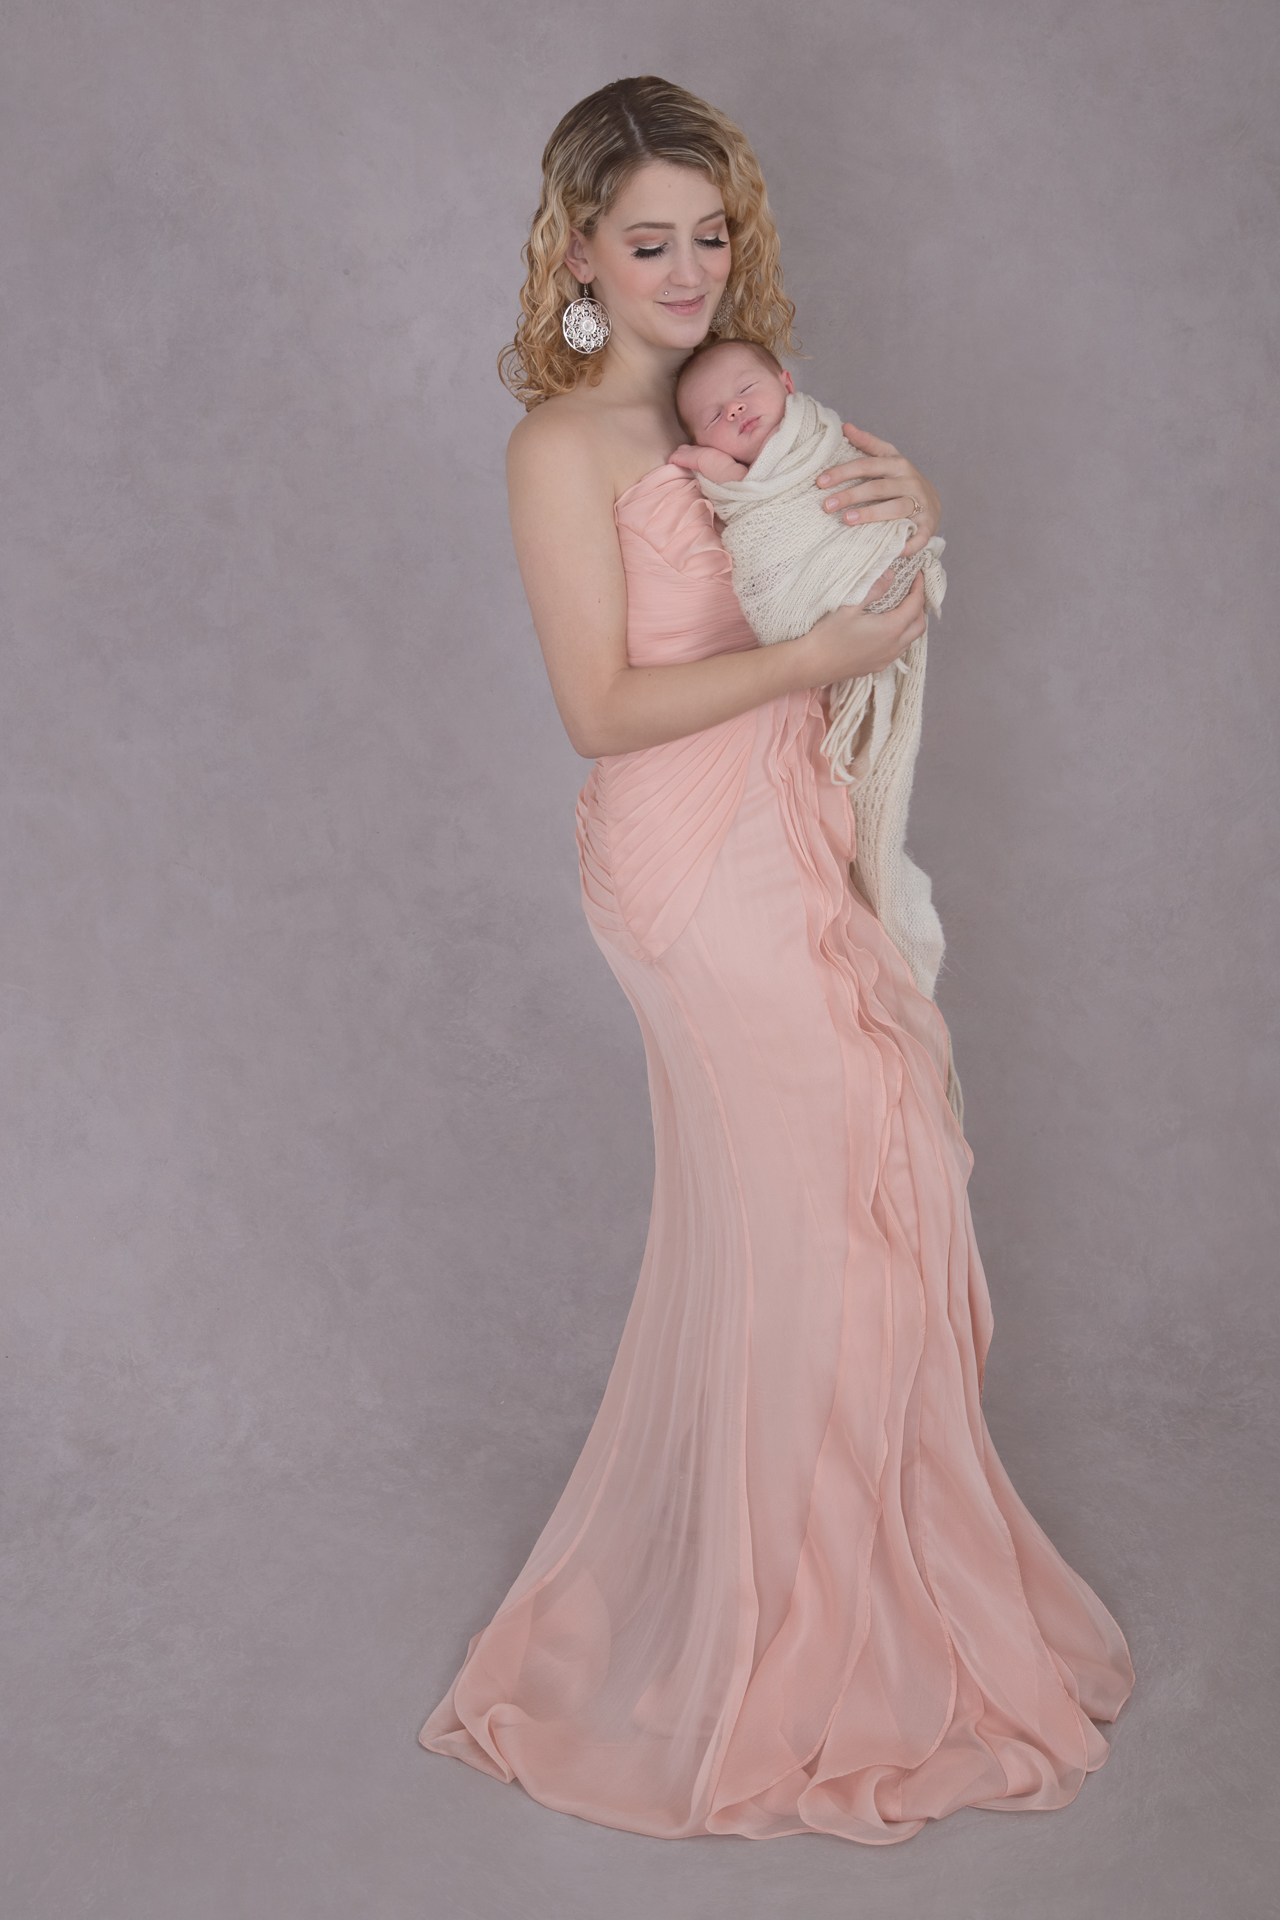 Woman on a pink dress holds her newborn. Light gray backdrop.